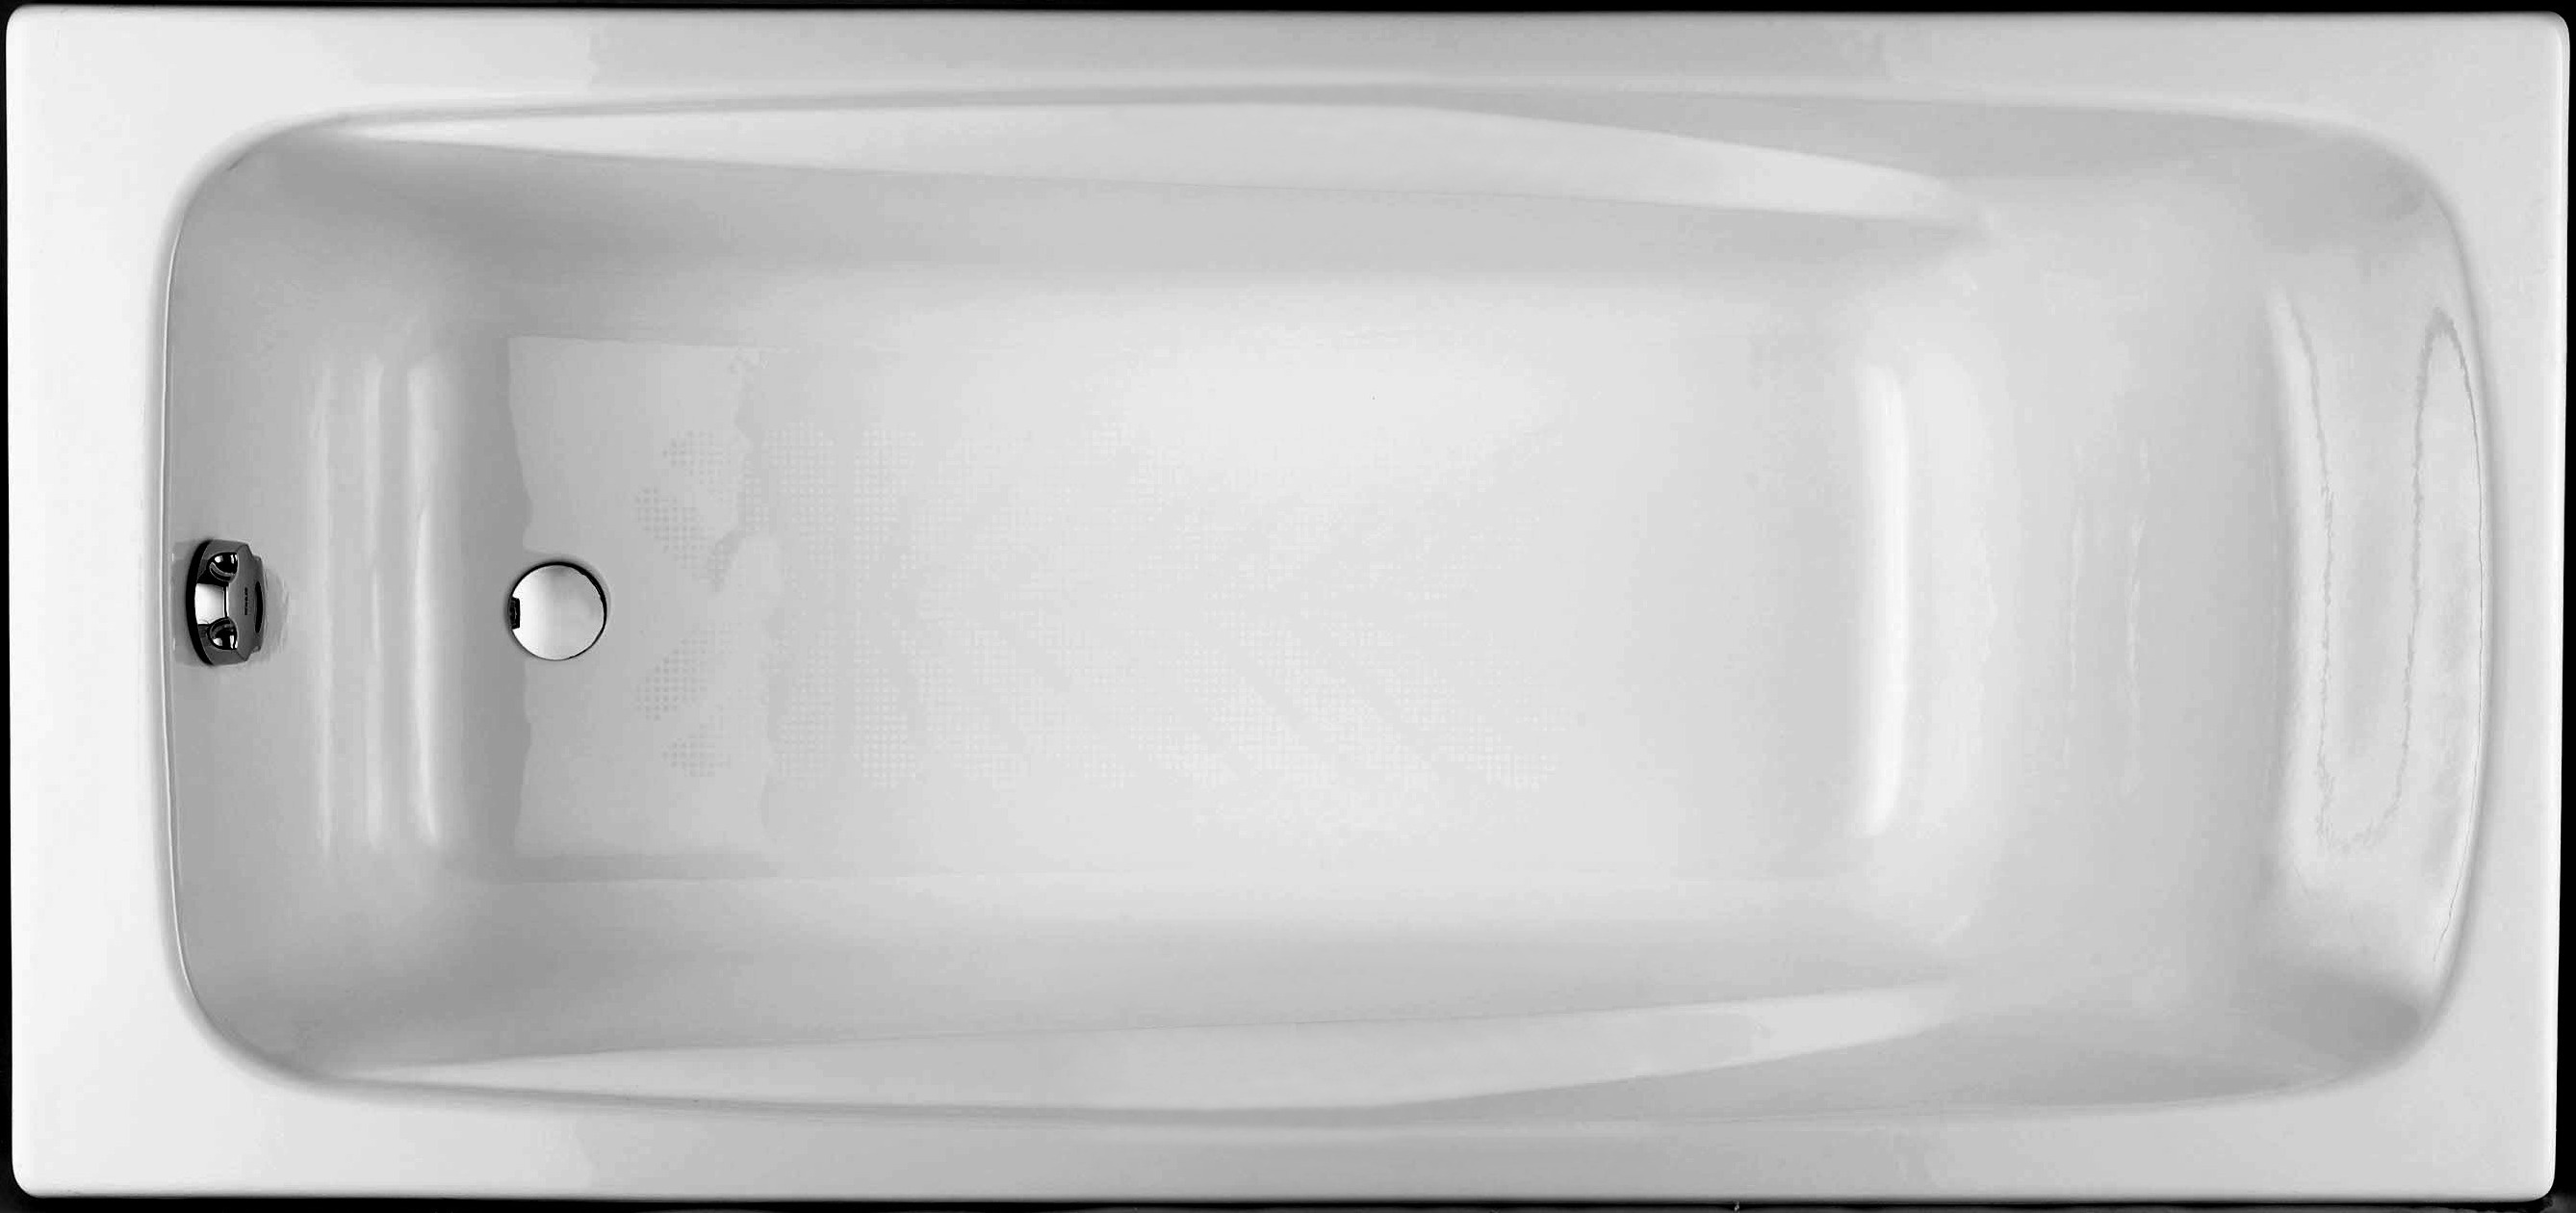 REPOS - Ванна чугунная без ручек 180 х 85 см